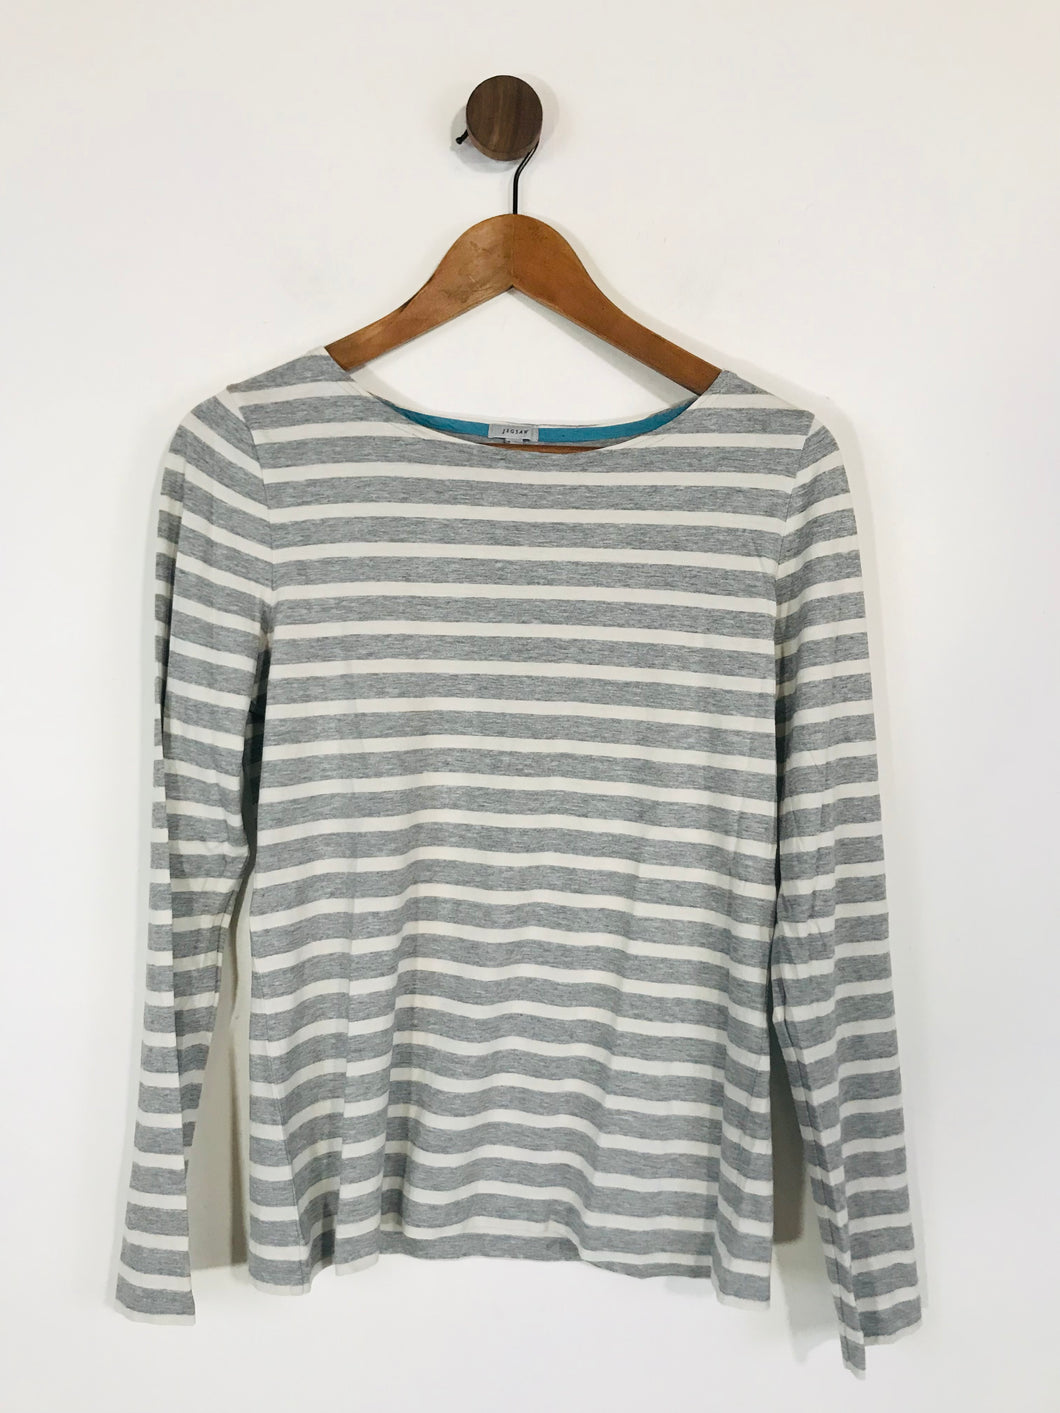 Jigsaw Women's Long Sleeve Striped T-Shirt | M UK10-12 | Grey